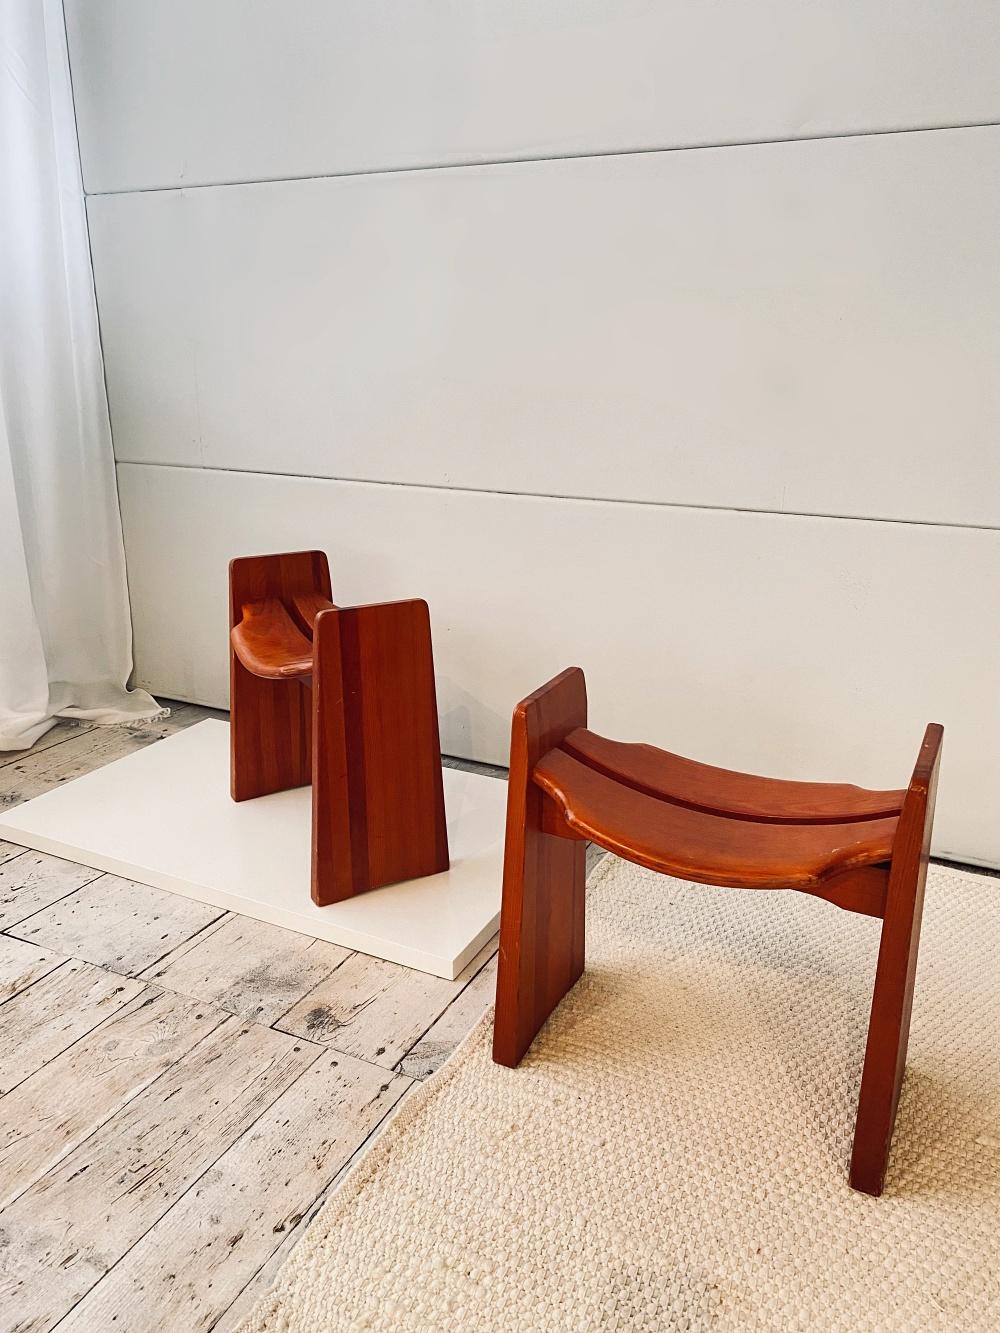 gilbert marklund stool